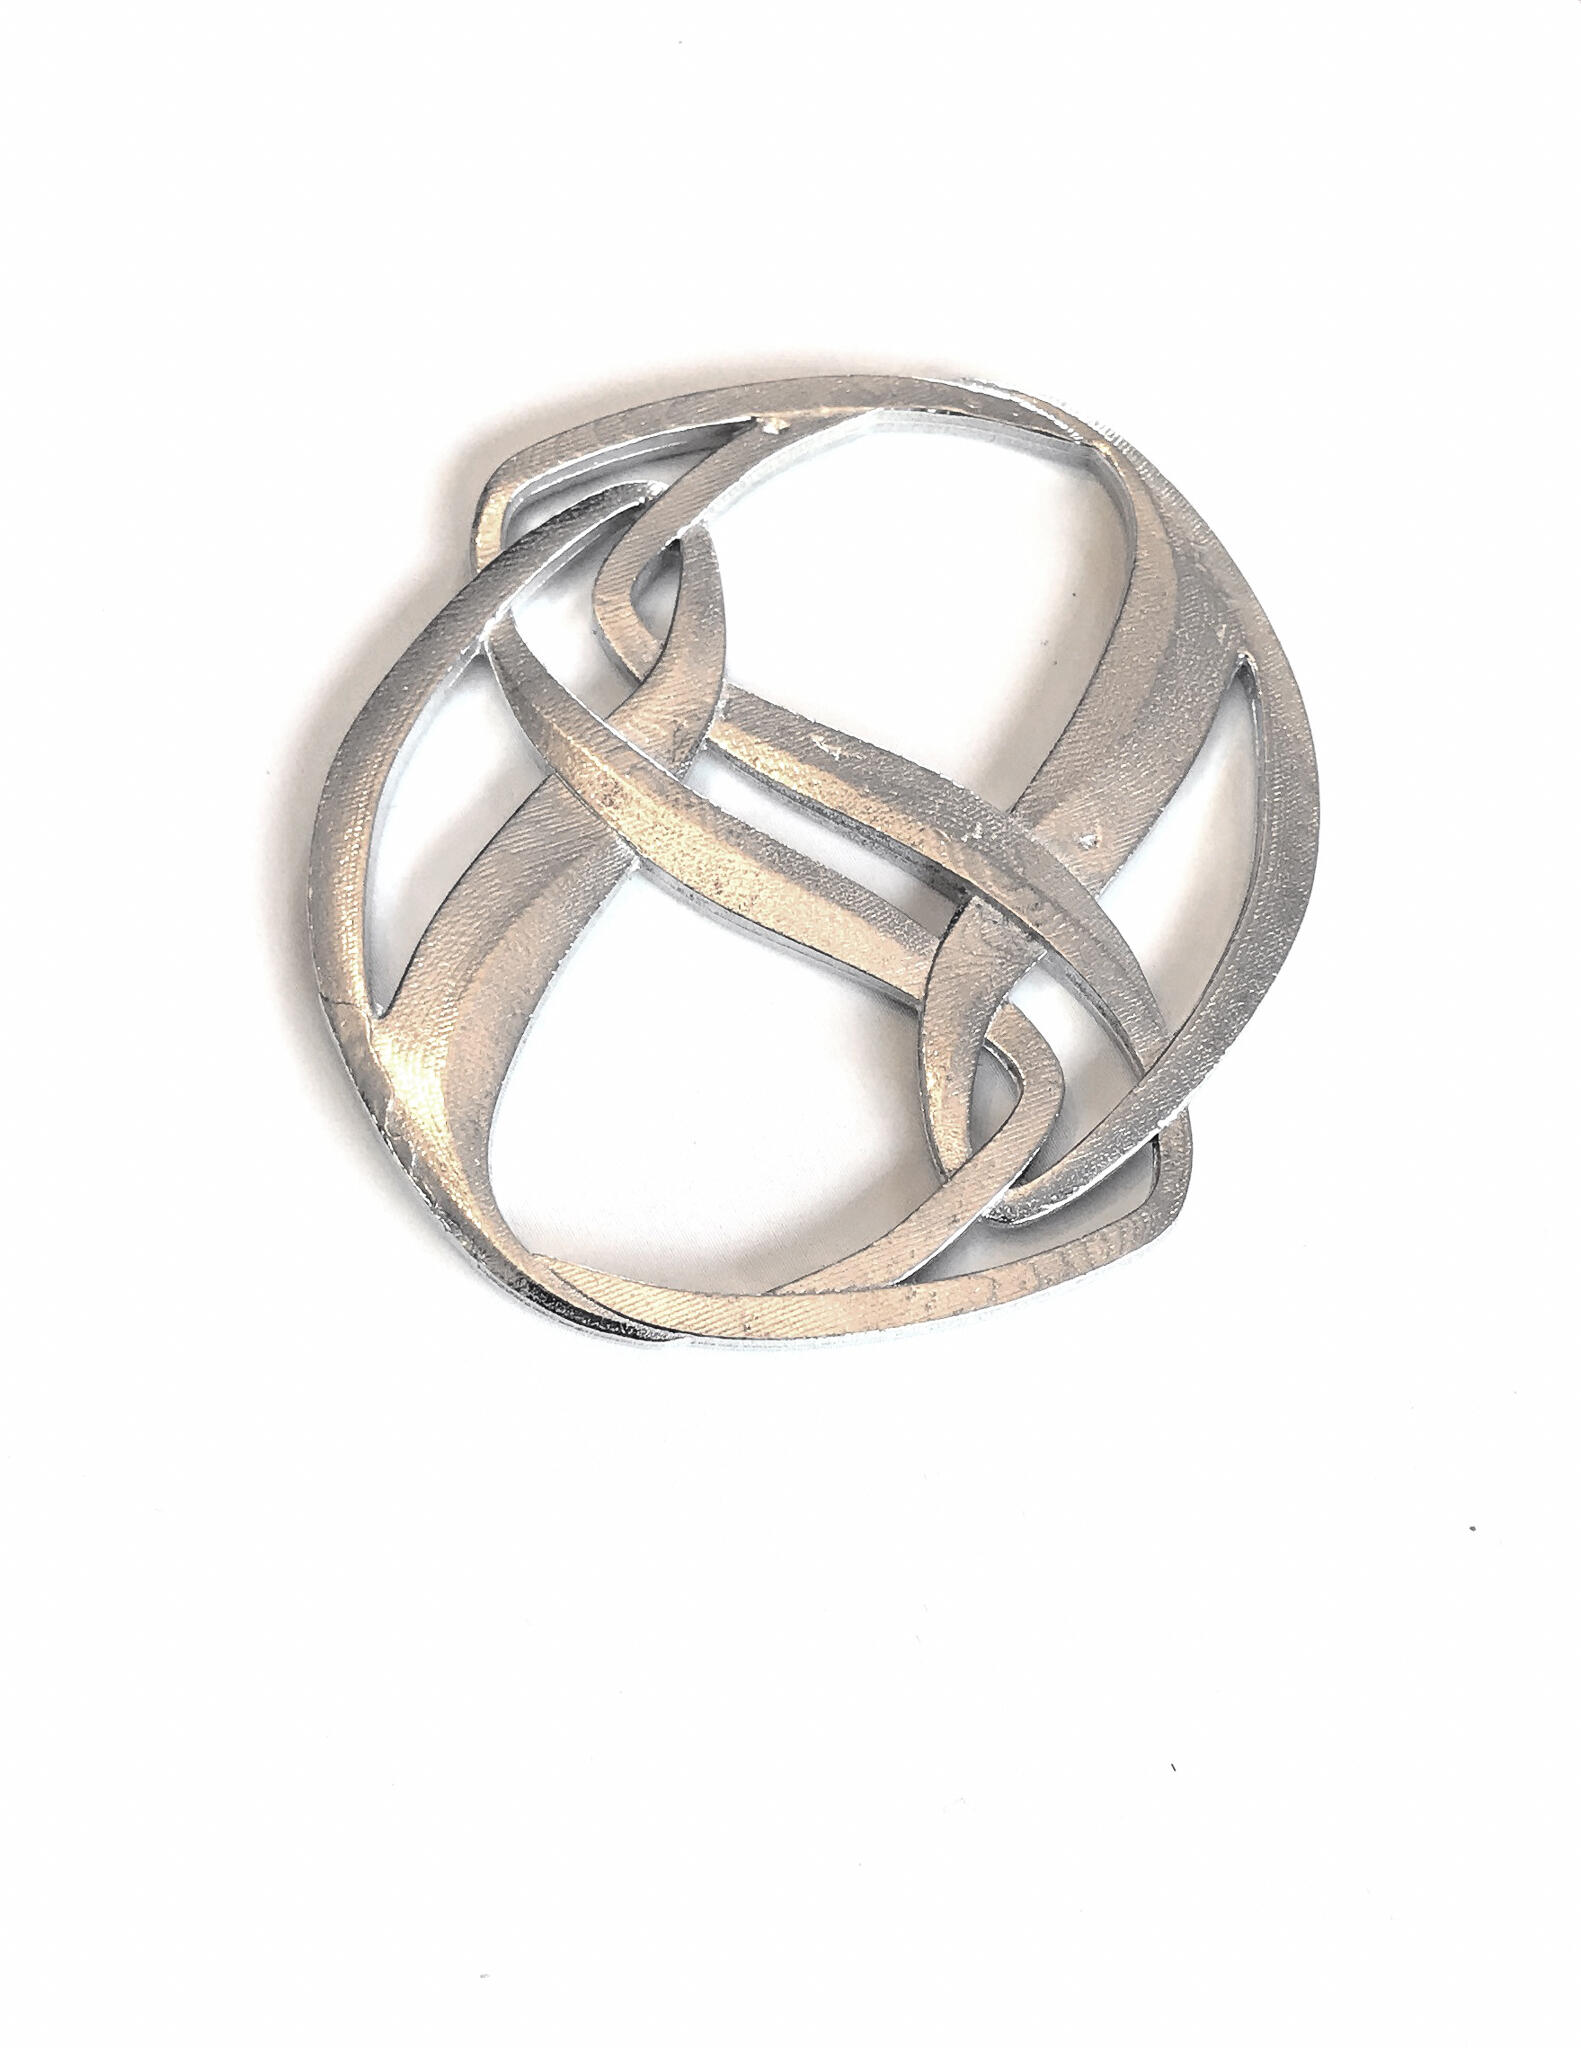 USA Handmade Infinity Pewter Scarf Ring